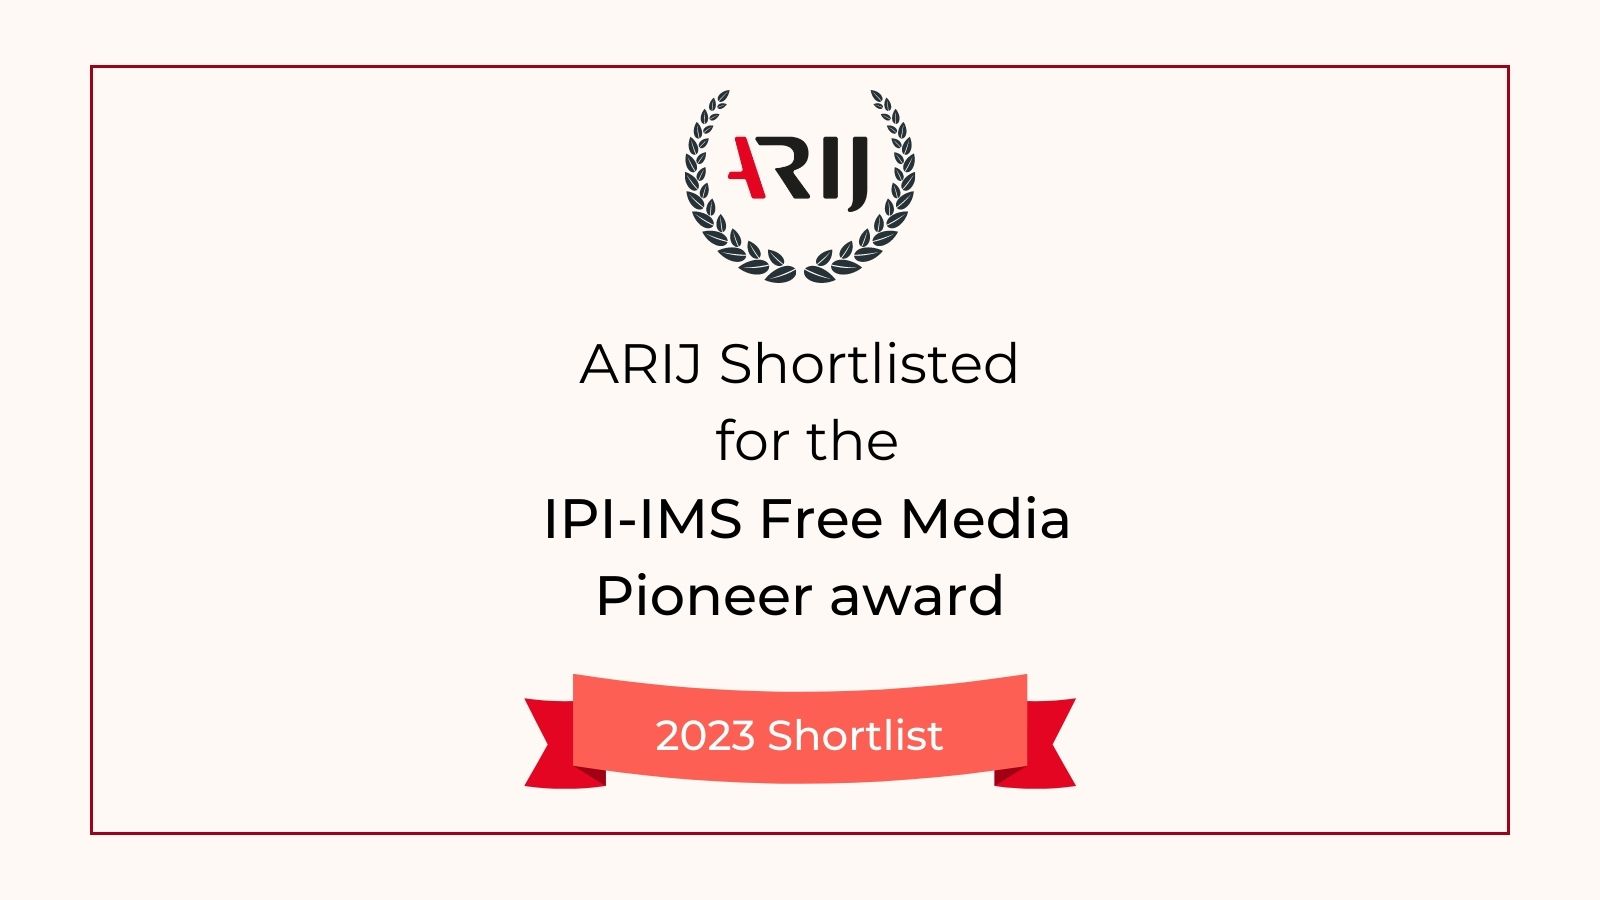 ARIJ Shortlisted for the IPI-IMS Free Media Pioneer Award